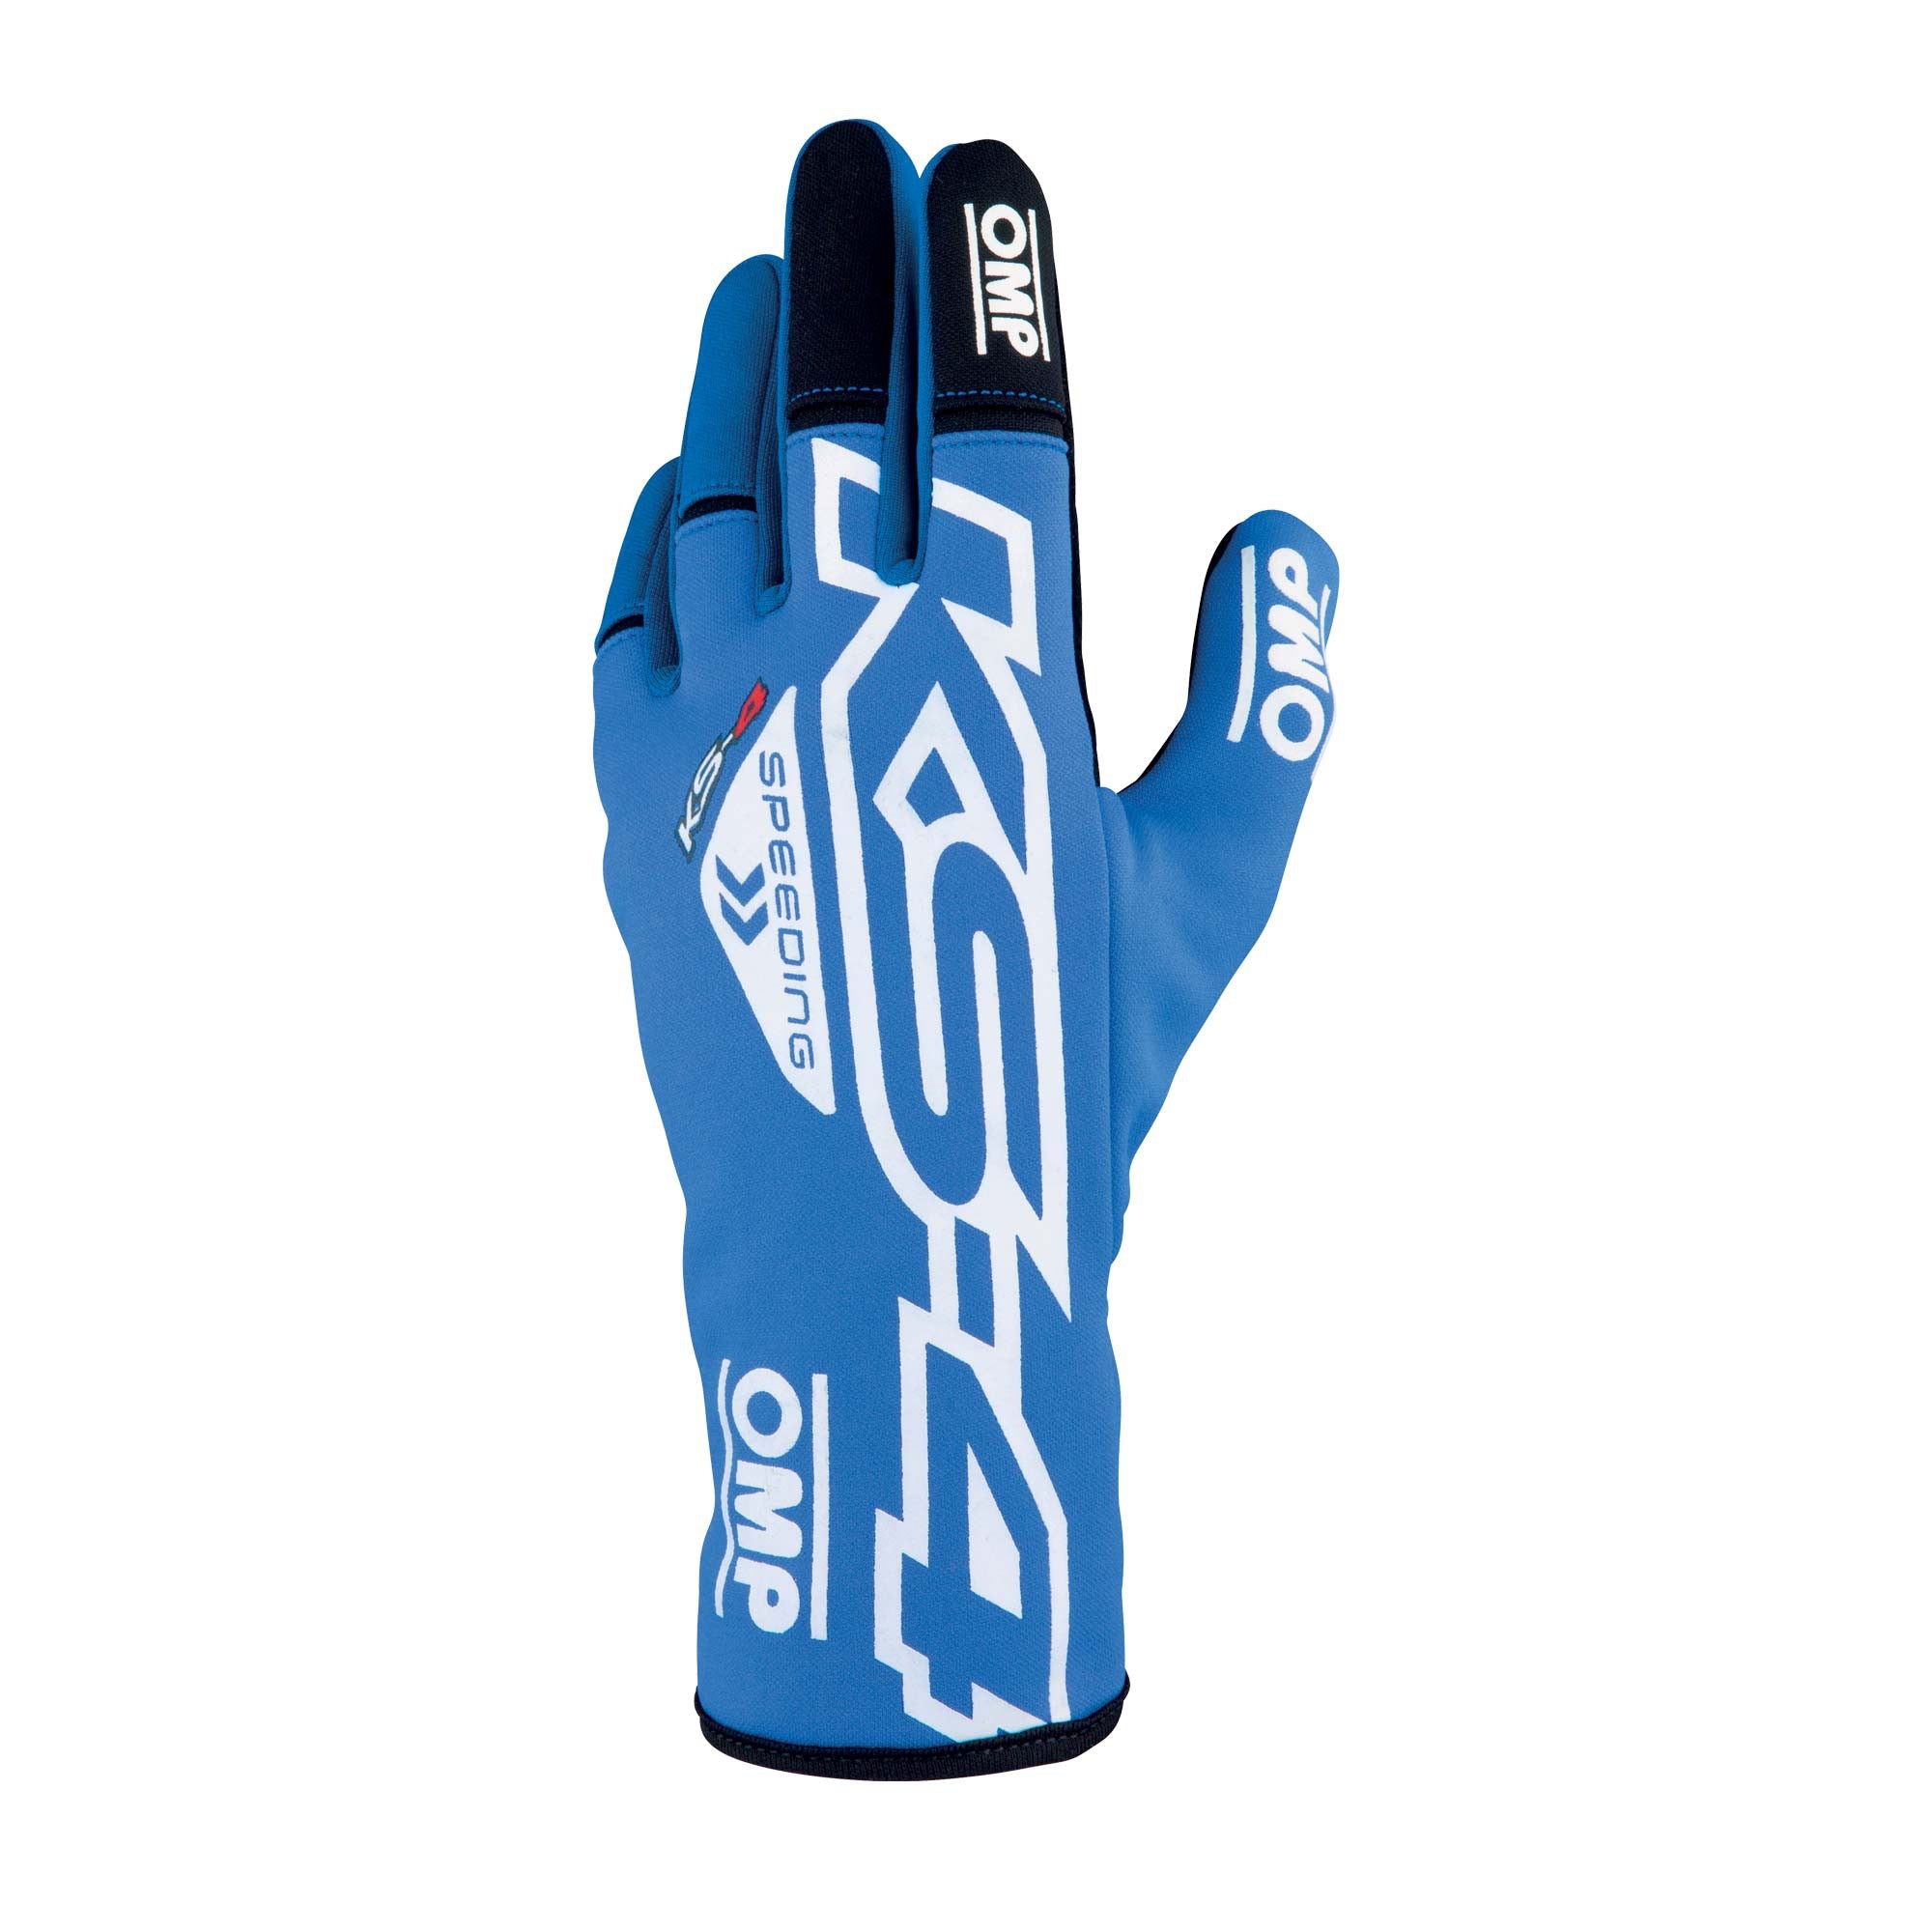 OMP KB0-2750-A01-043-L KS-4 Gloves my2023 Karting gloves, blue/white, size L Photo-0 